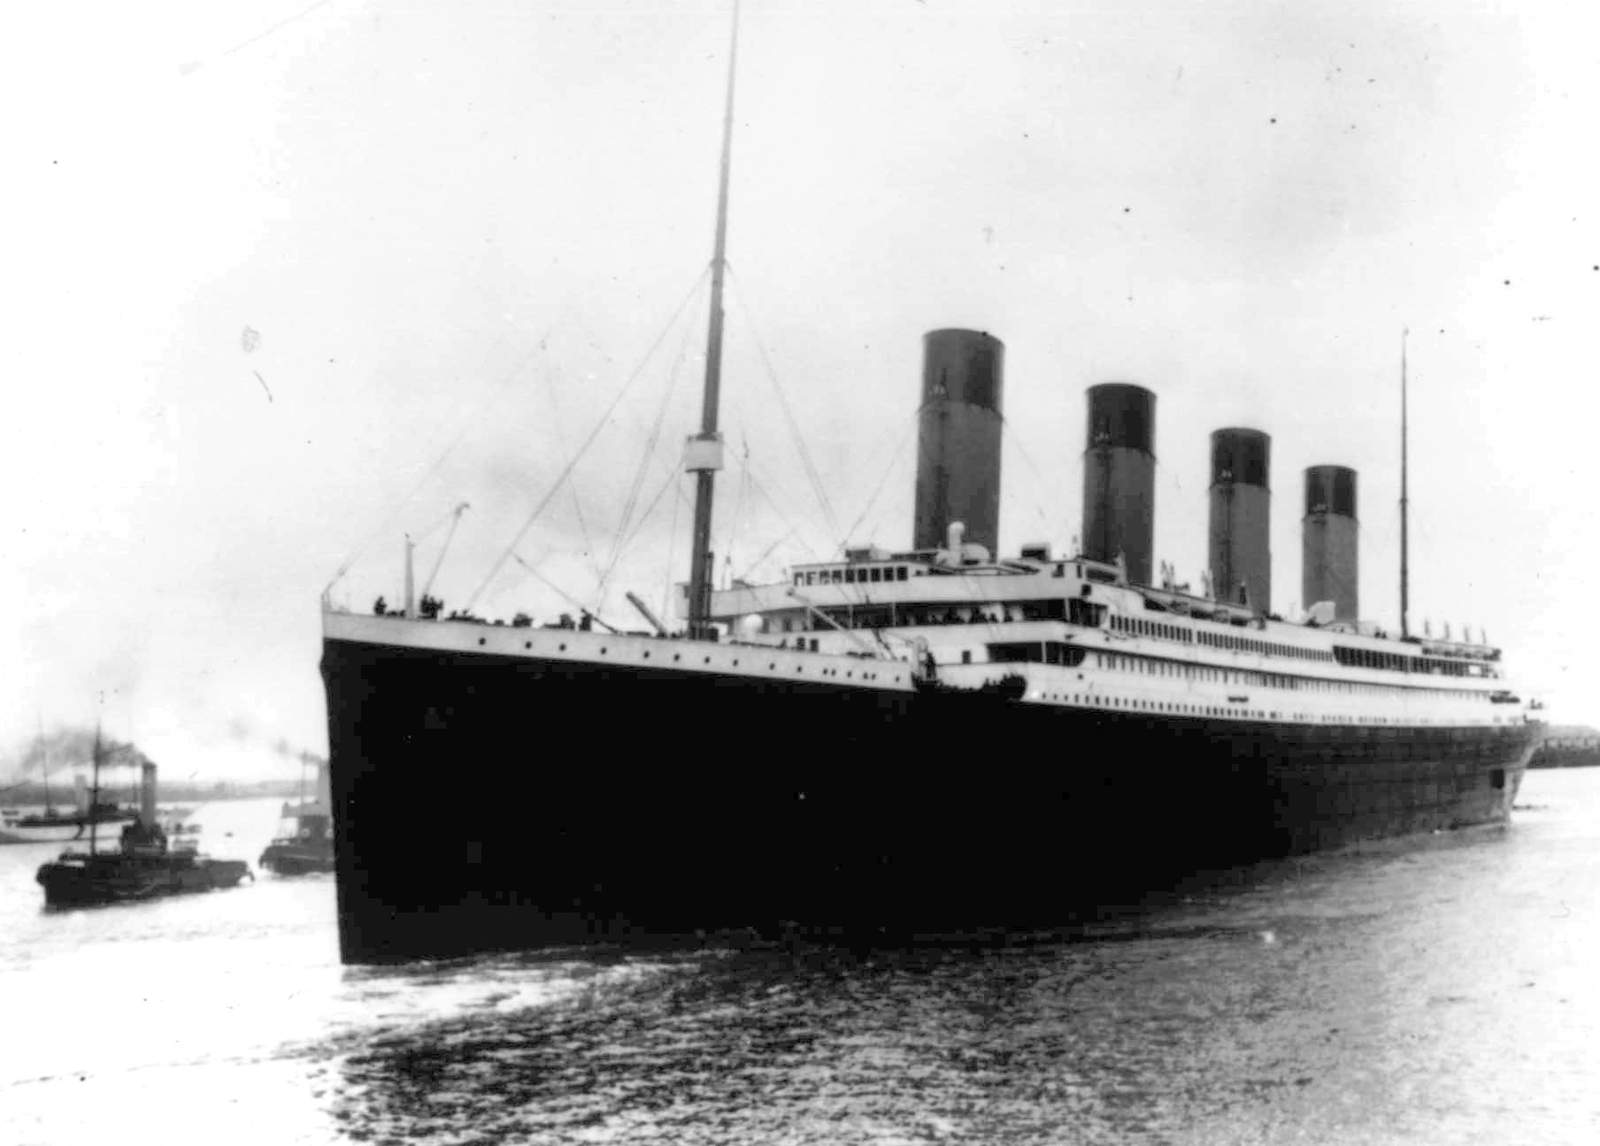 US challenges planned expedition to retrieve Titanic's radio